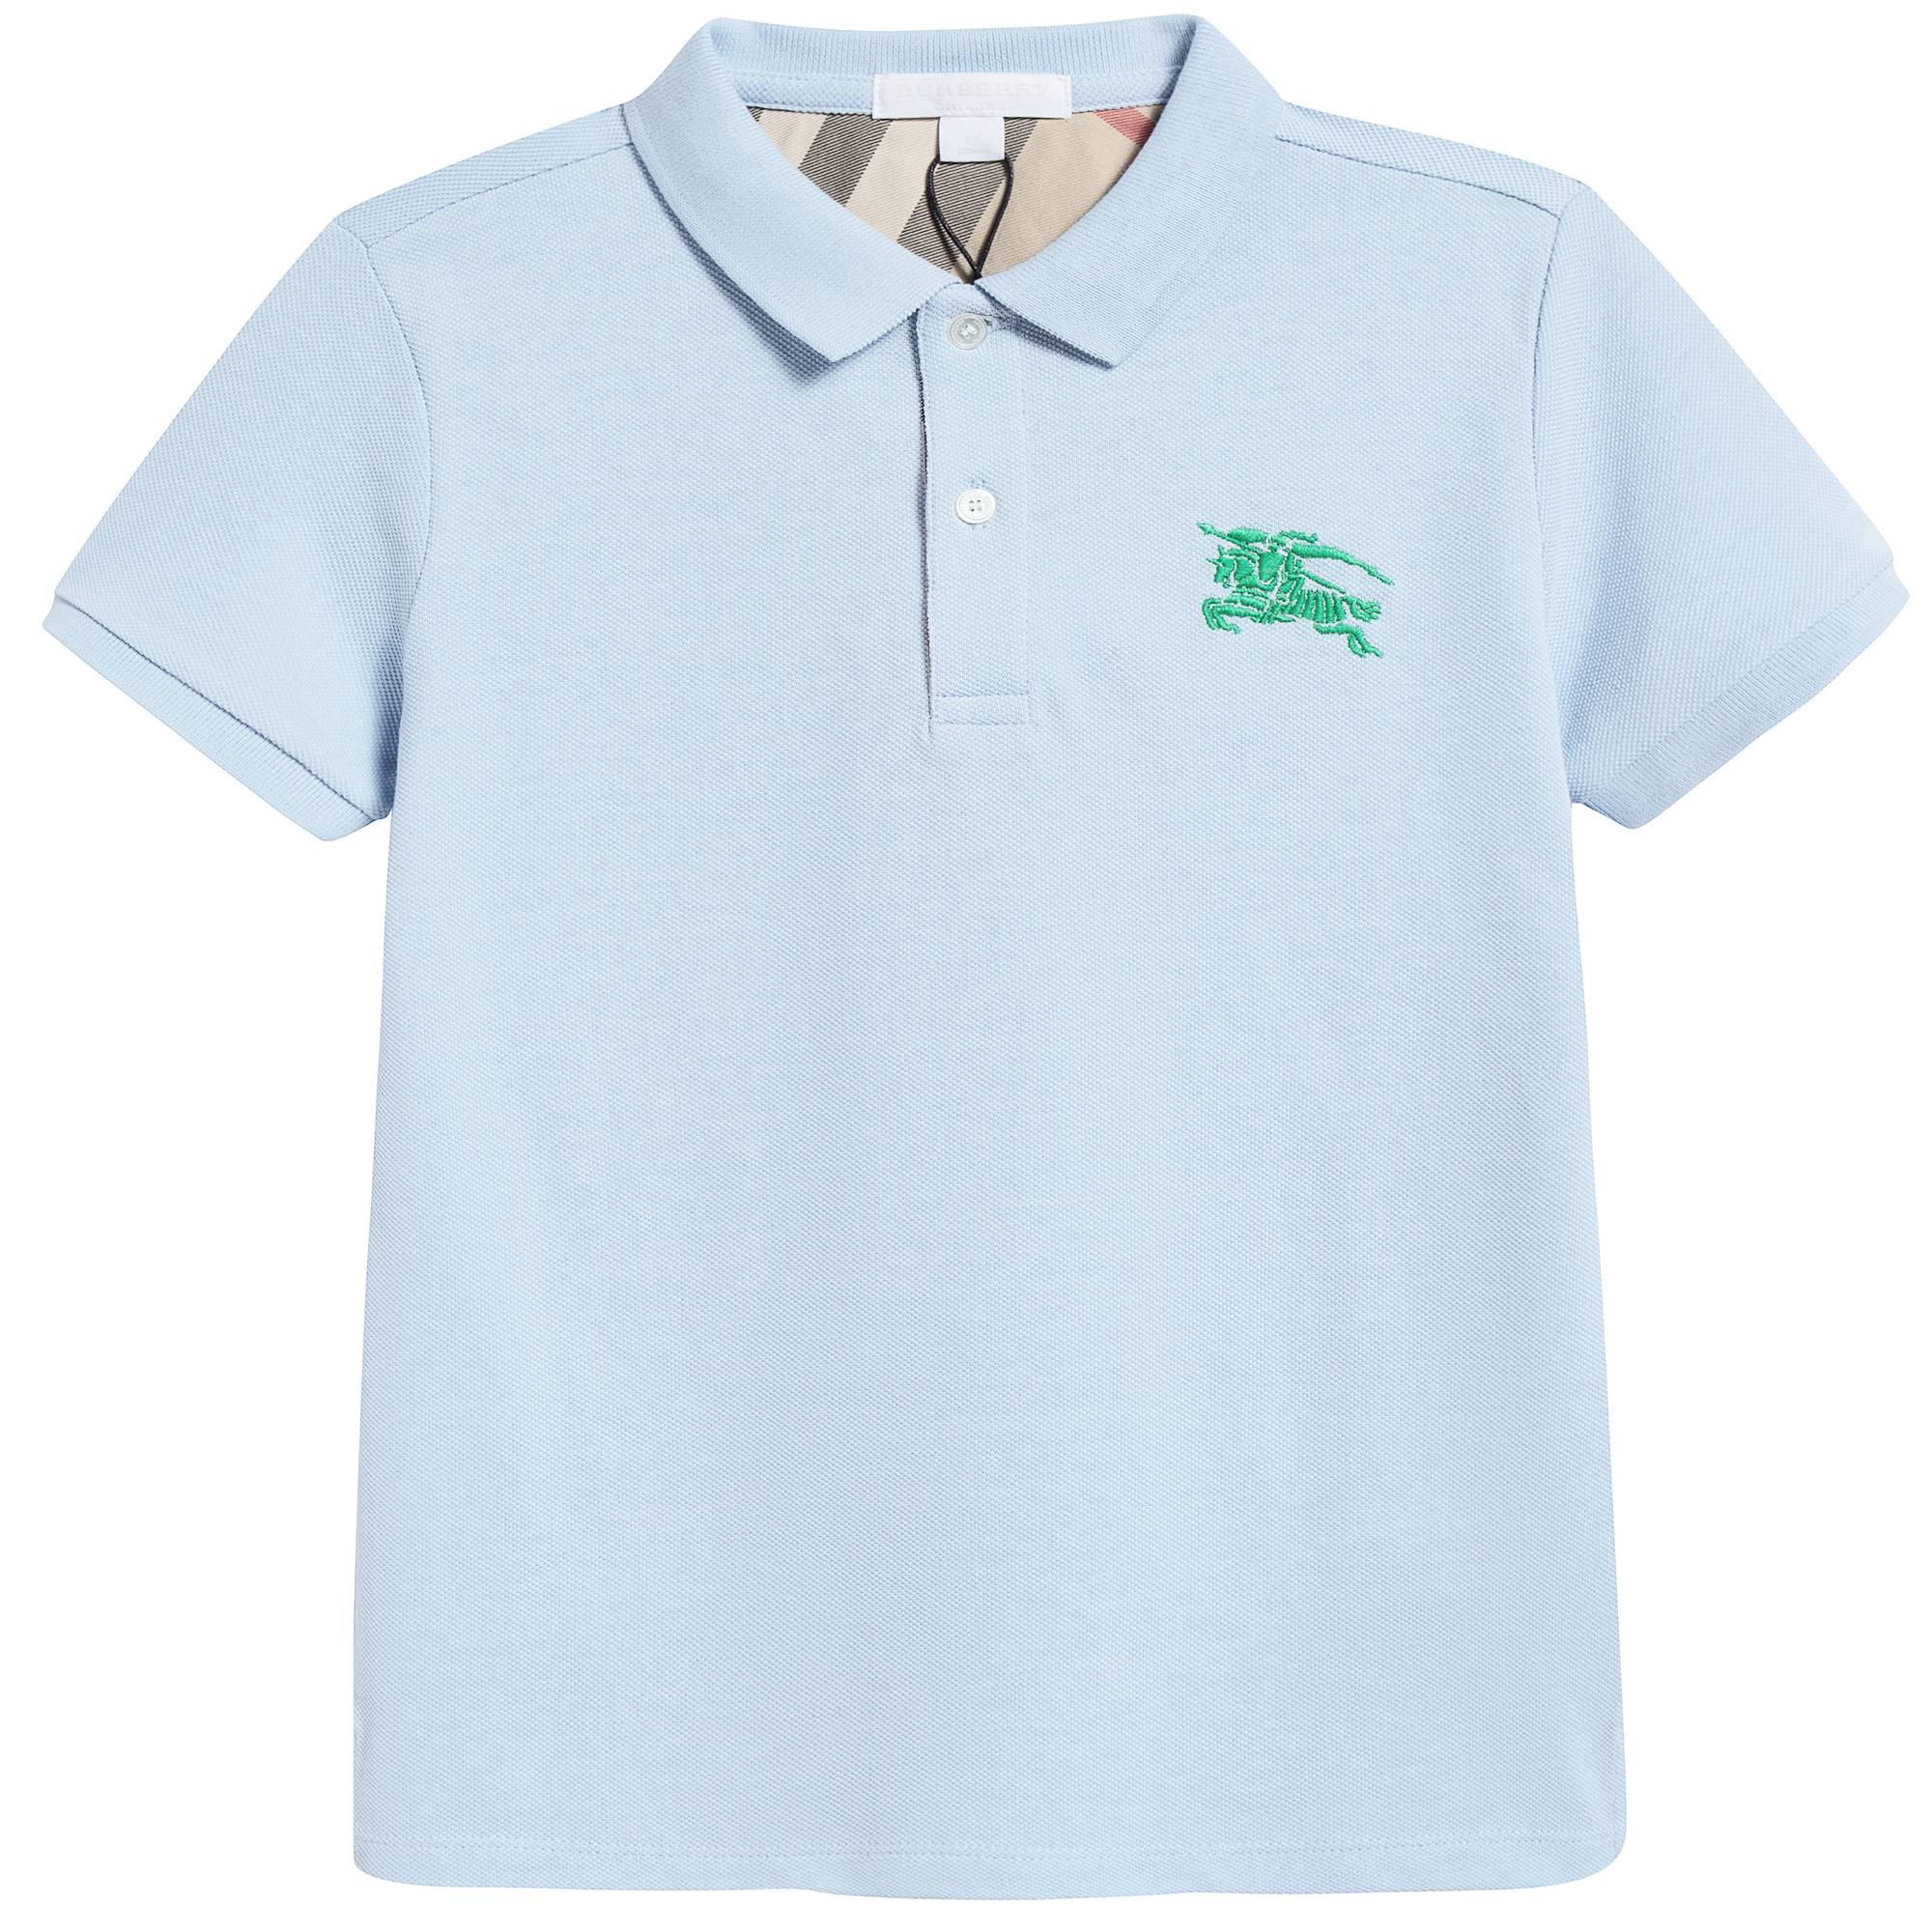 Boys Sky Blue Cotton Polo Shirt